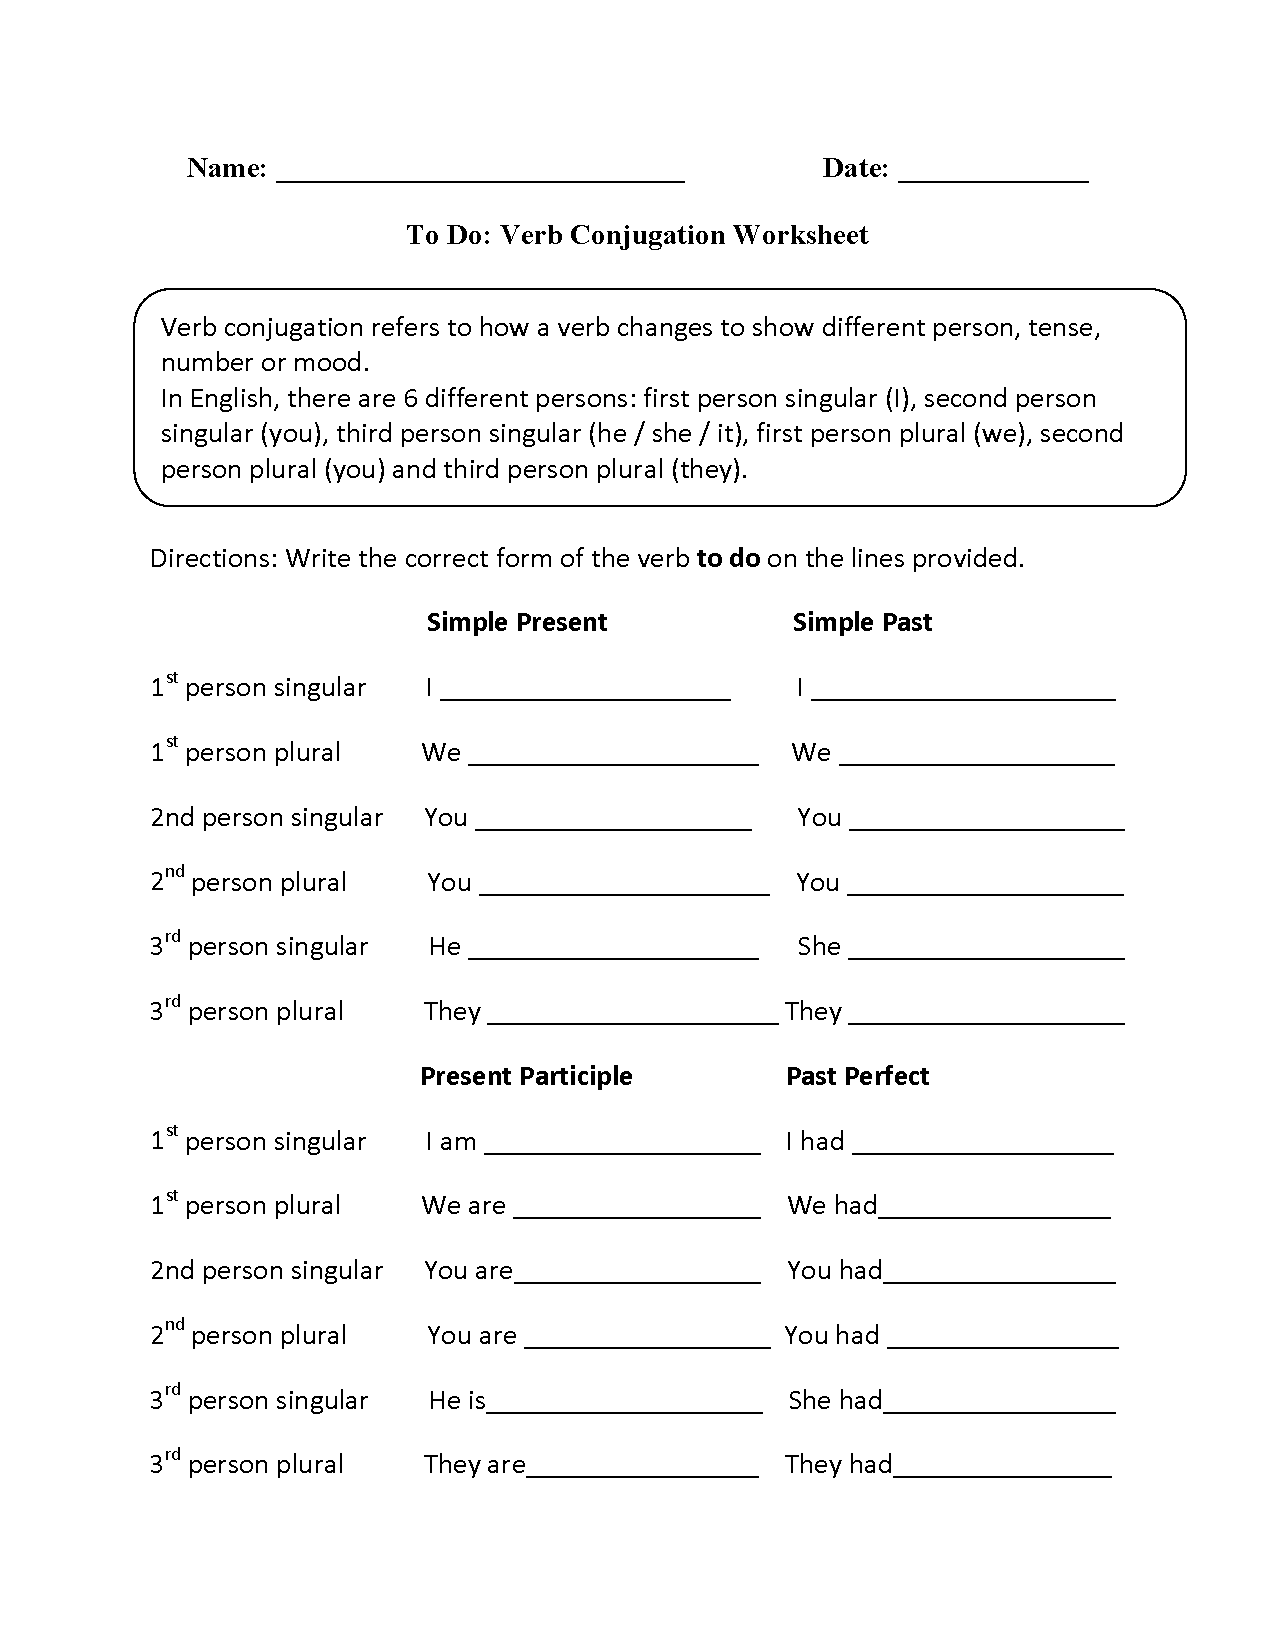 To Do Verb Conjugation Worksheets